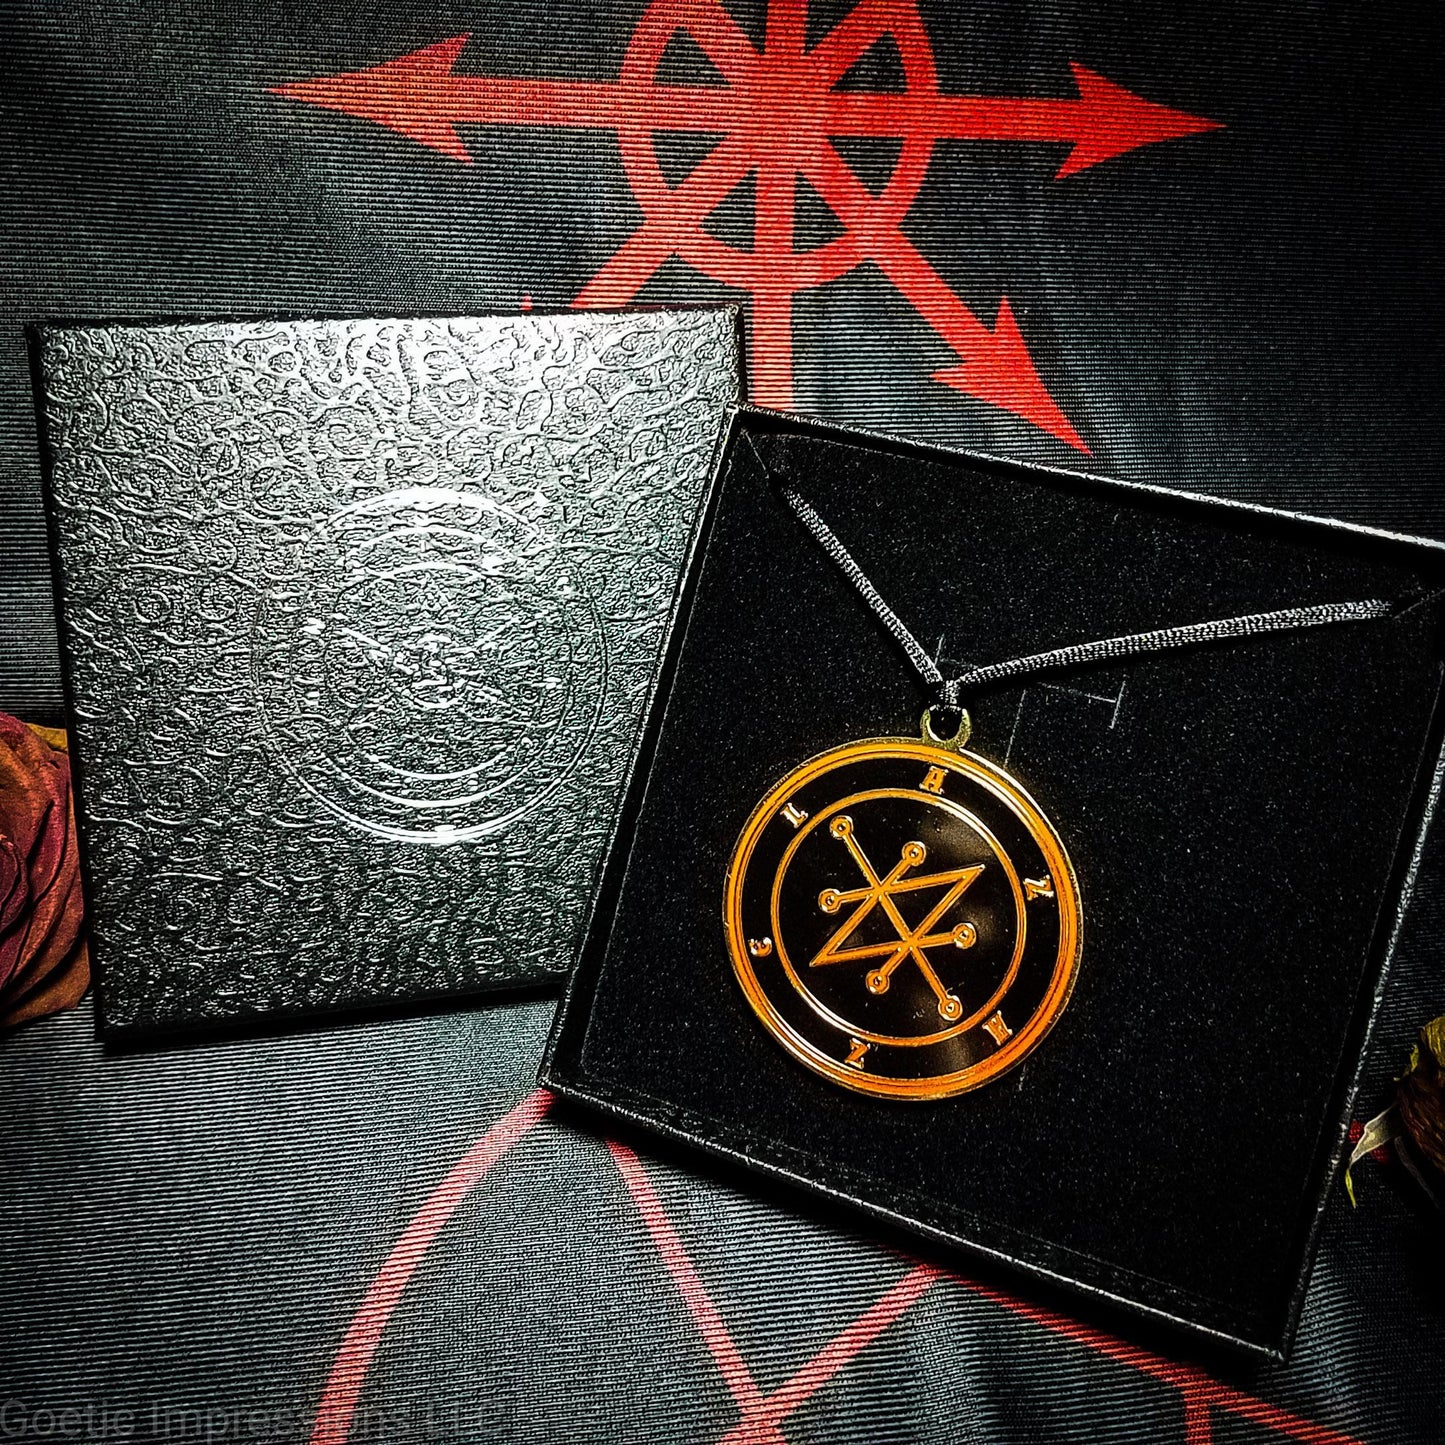 Red and Black Azazel sigil talisman with gift box